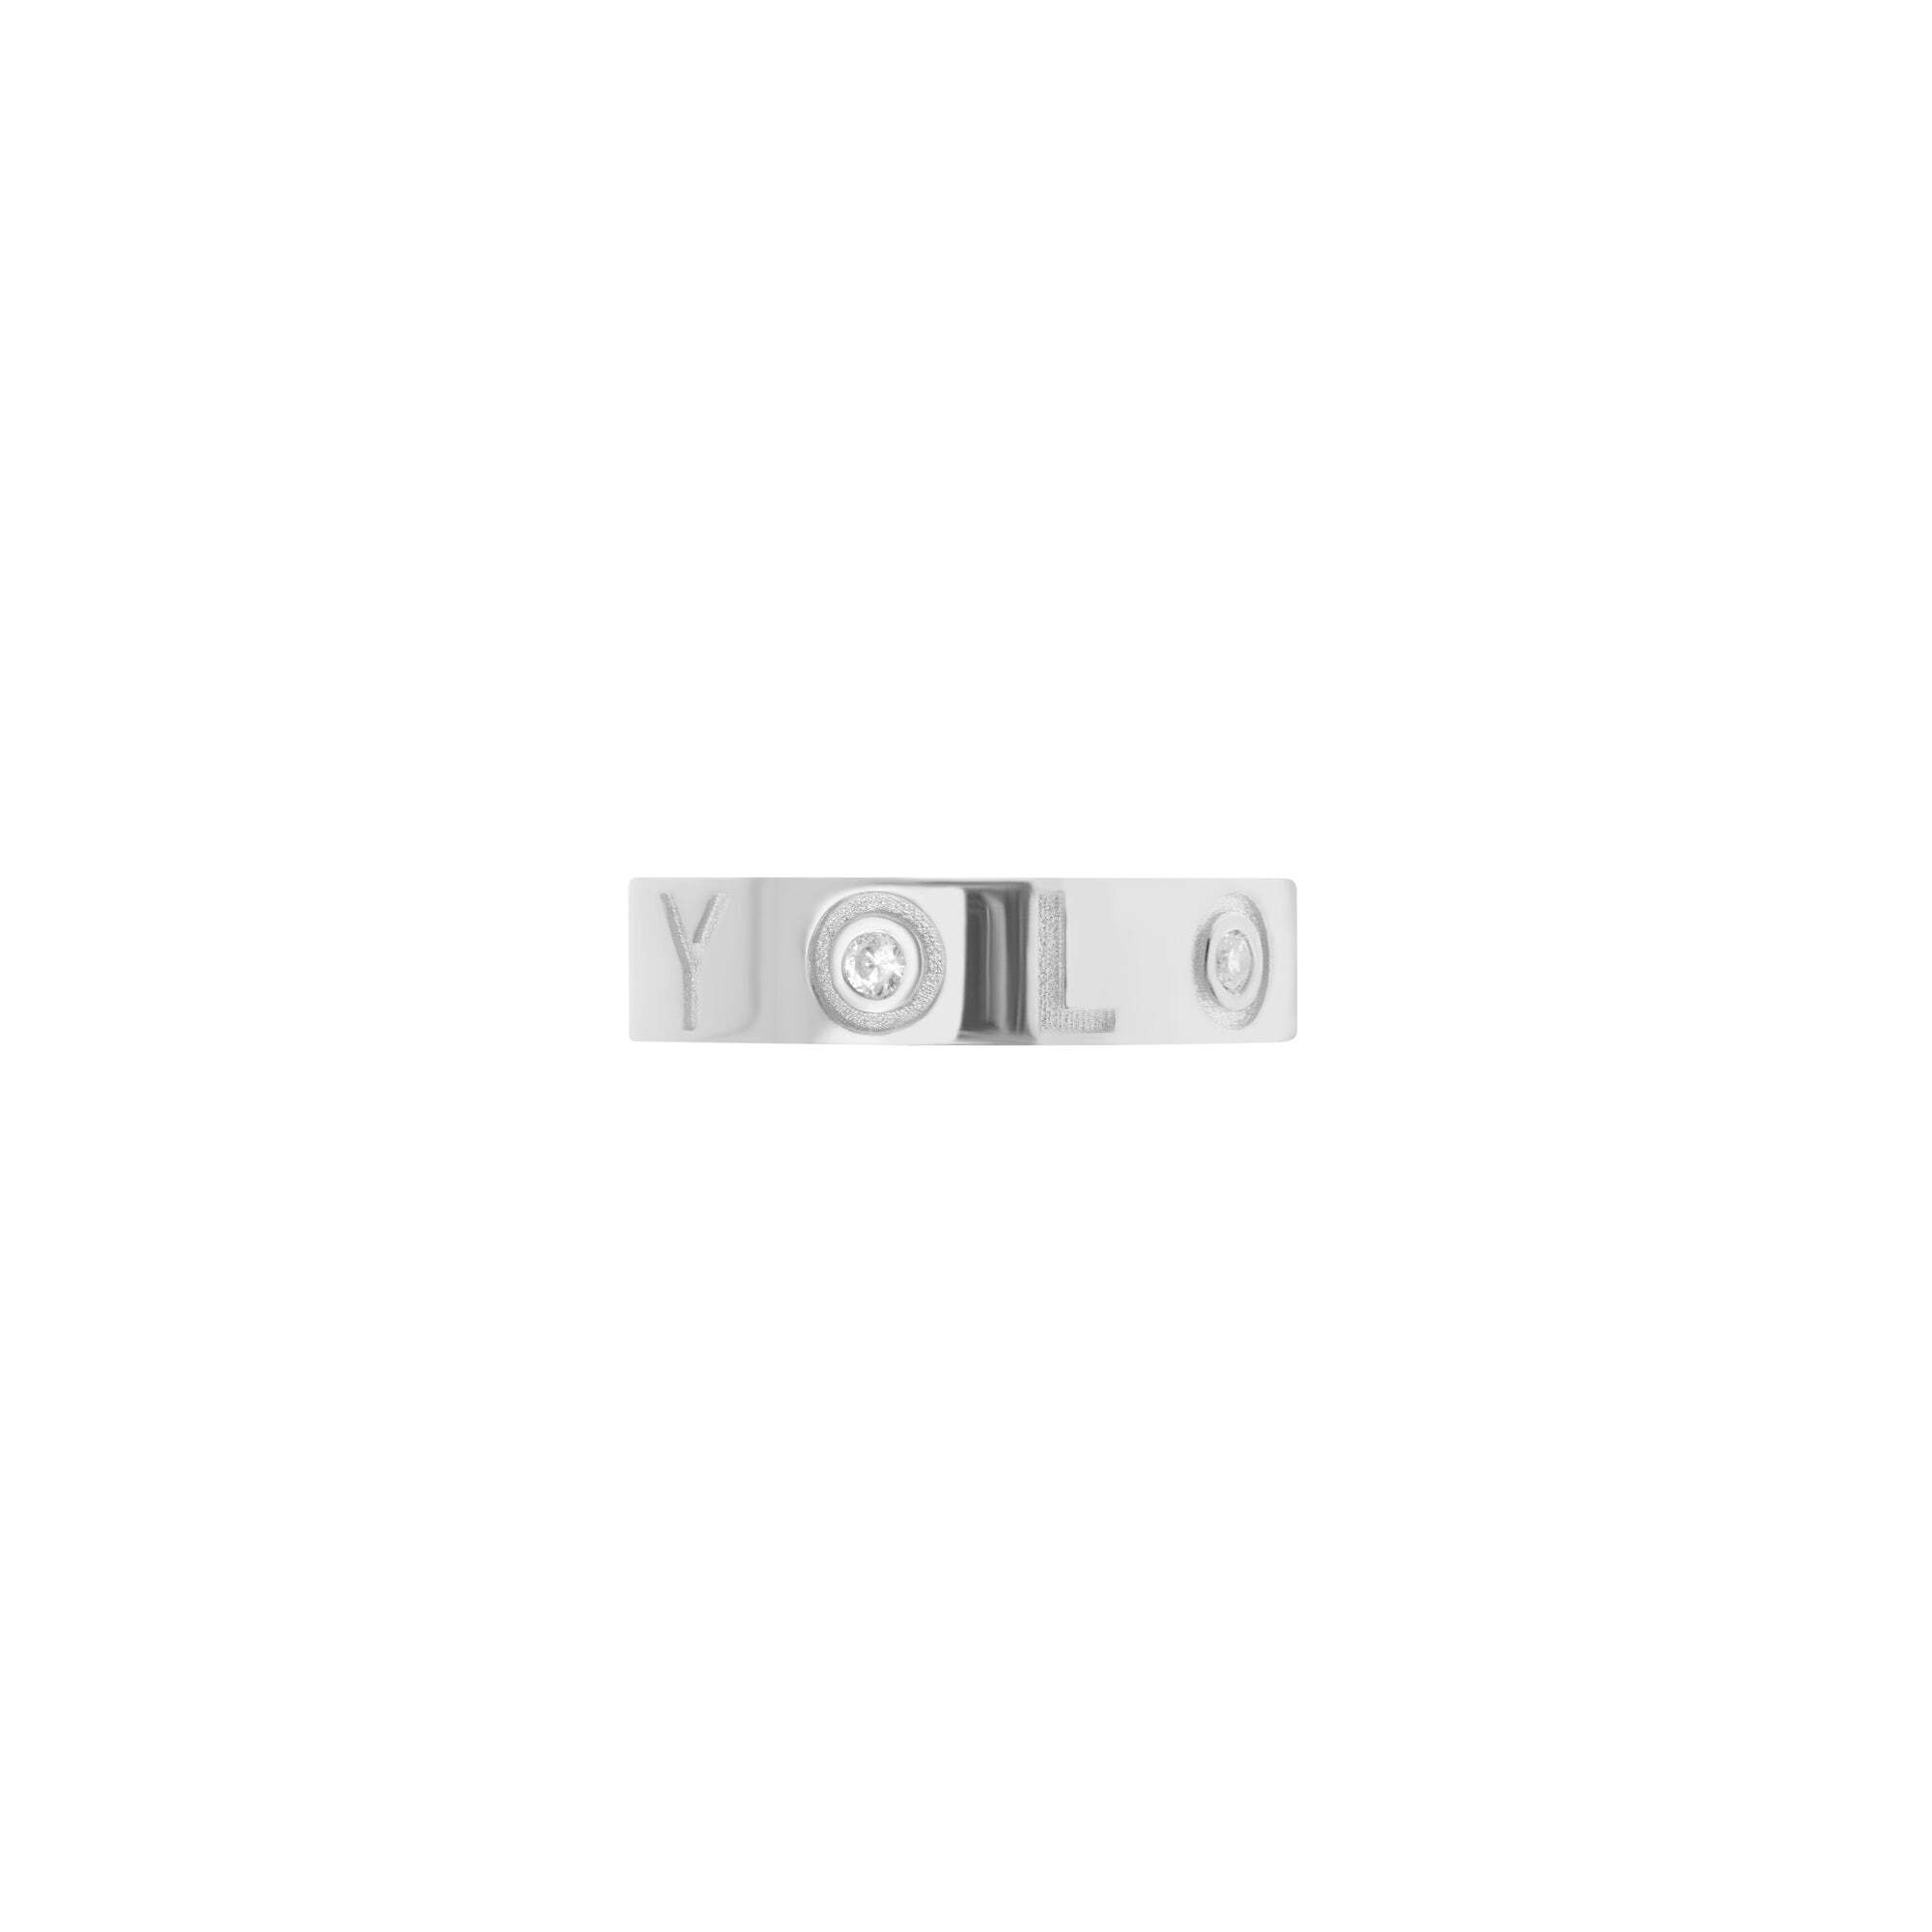 VIVA LA VIKA Кольцо Reminder Ring – YOLO Silver viva la vika кольцо reminder ring – yolo gold